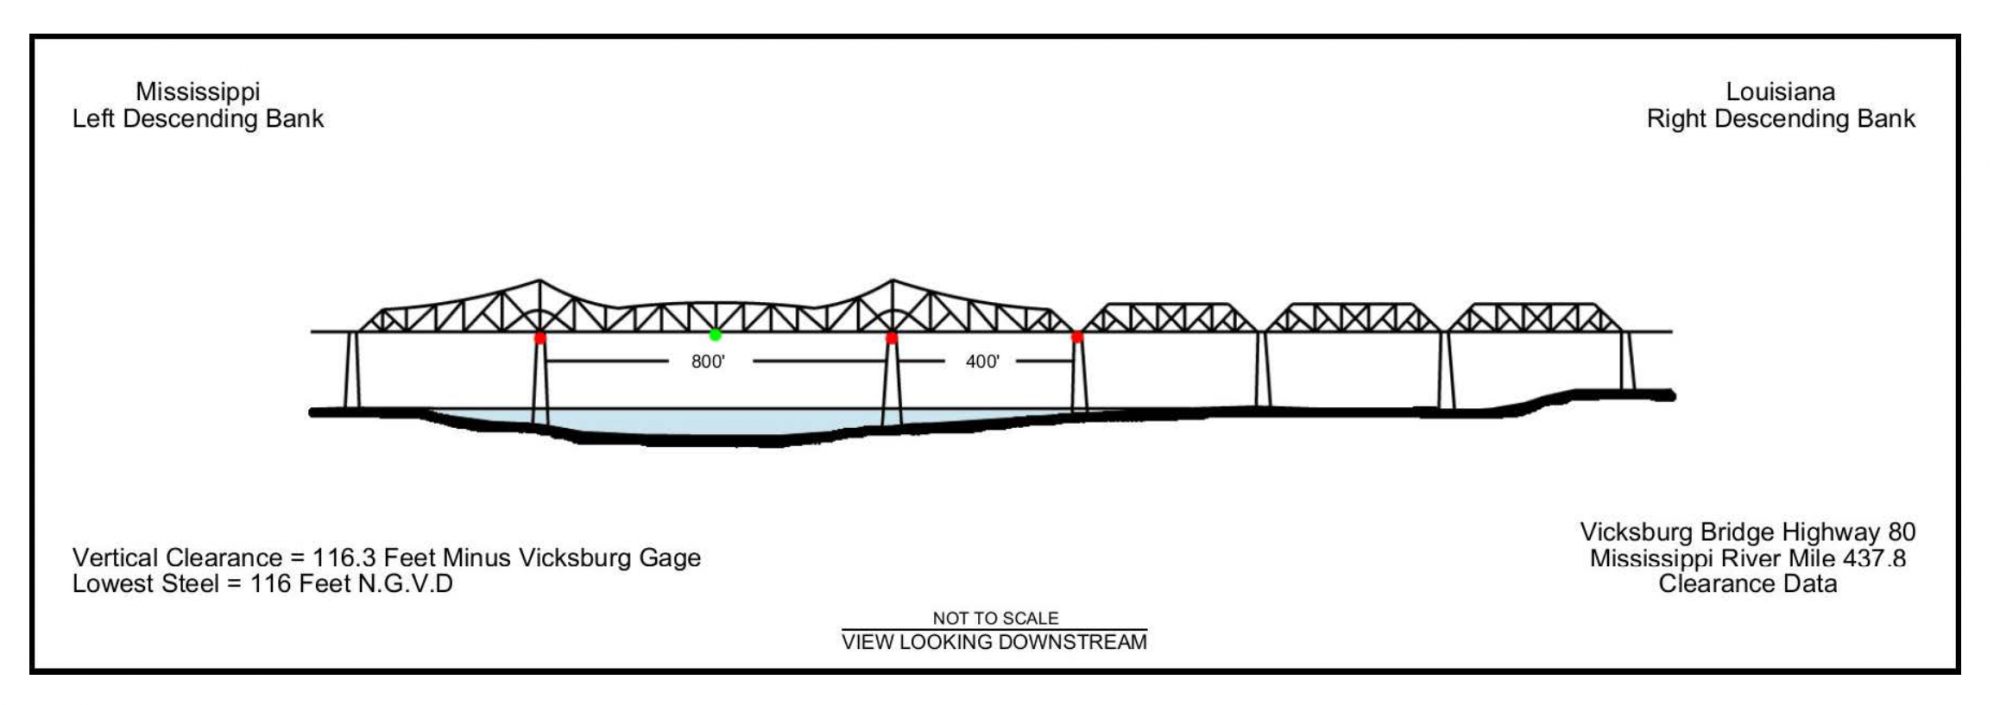 Vicksburg Railway and Hwy Bridge - Span 6 Clearances | Bridge Calculator LLC